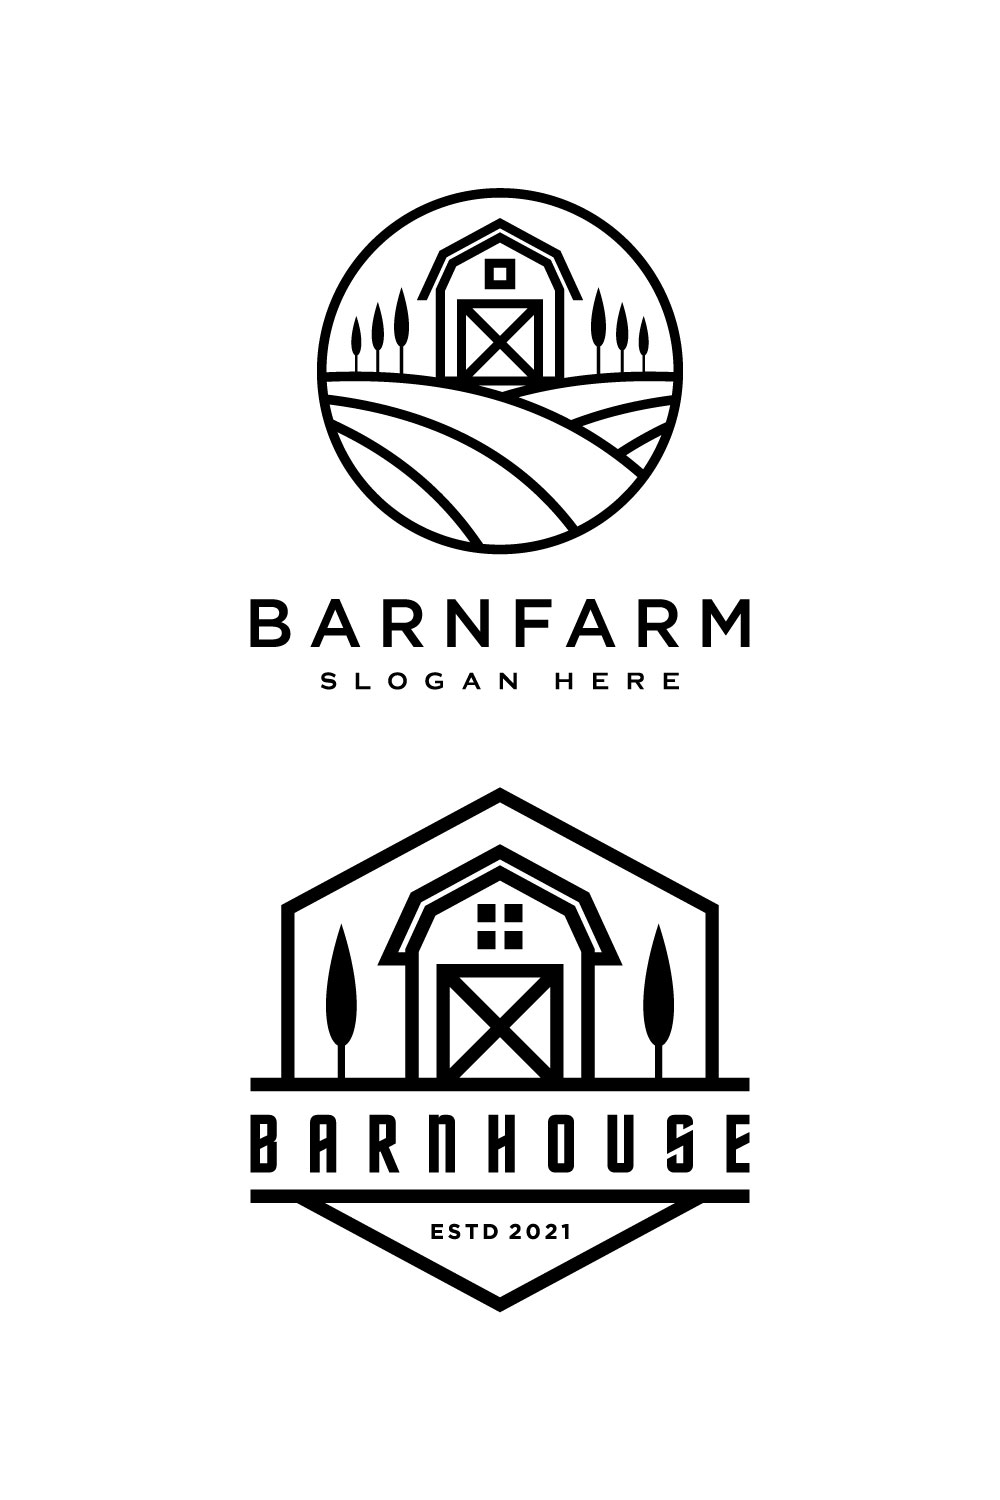 Set of Home Farm Logo Vector Design pinterest.